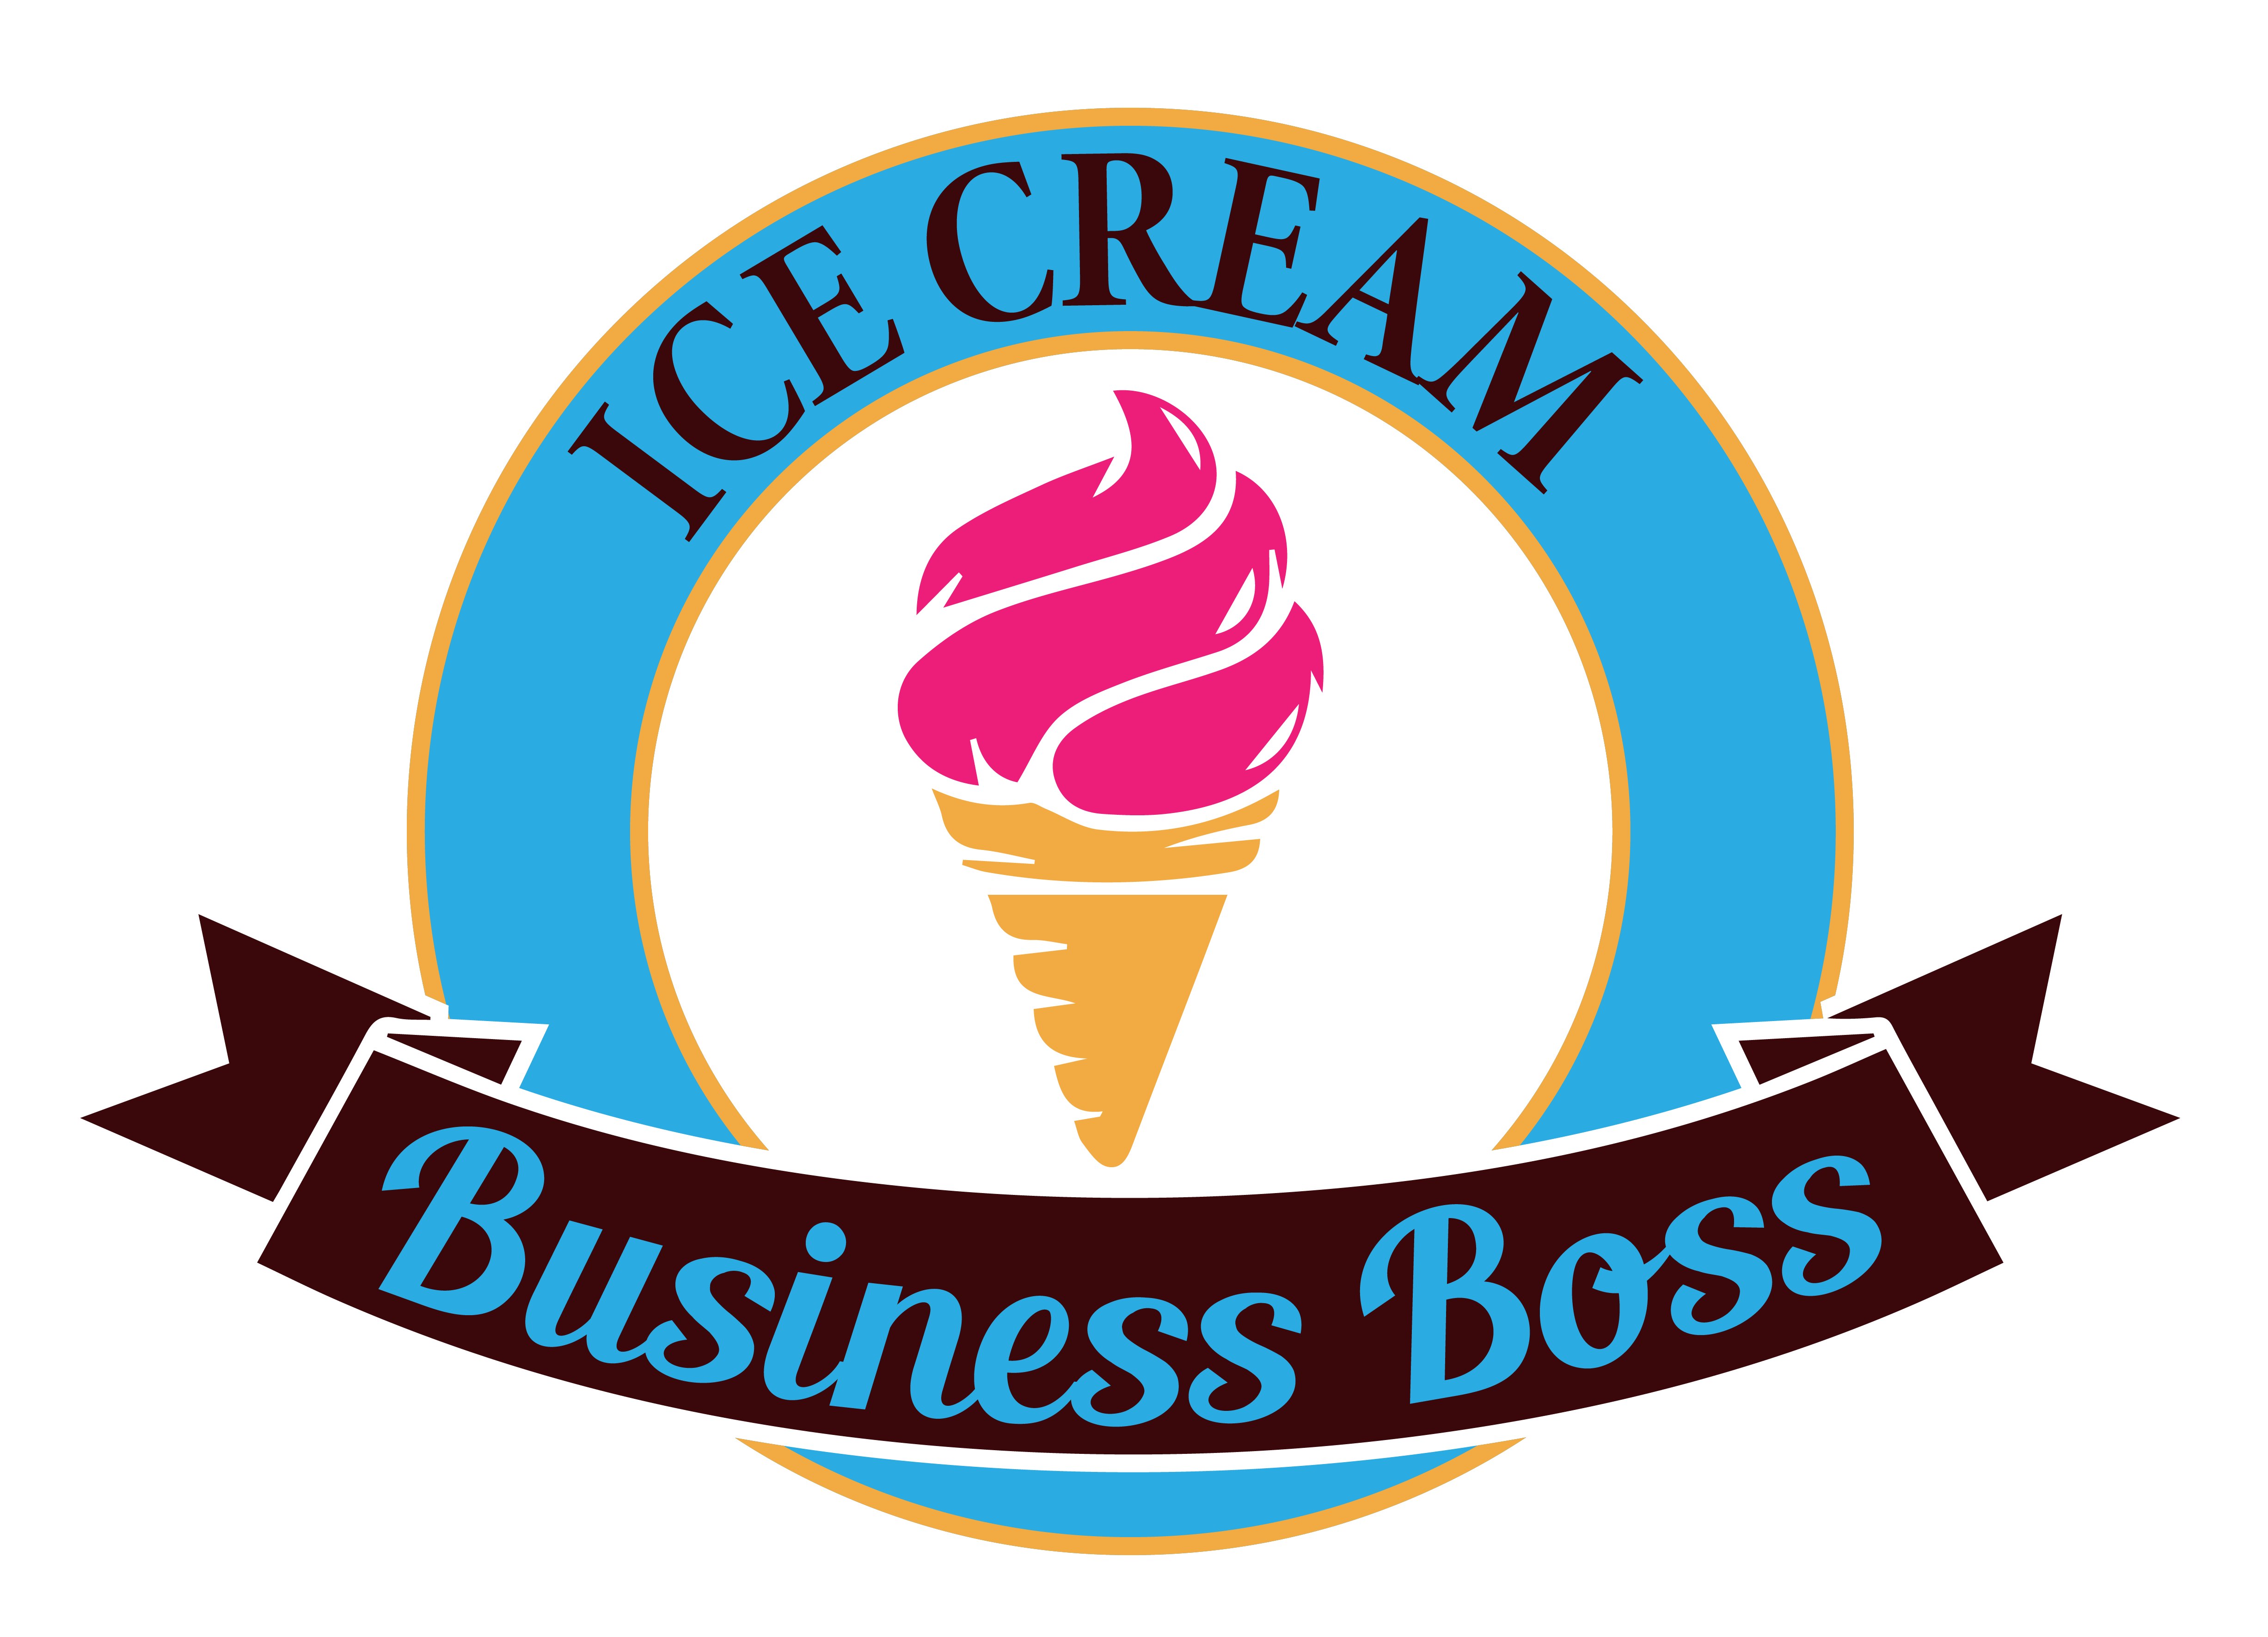 Ice Cream Business Boss